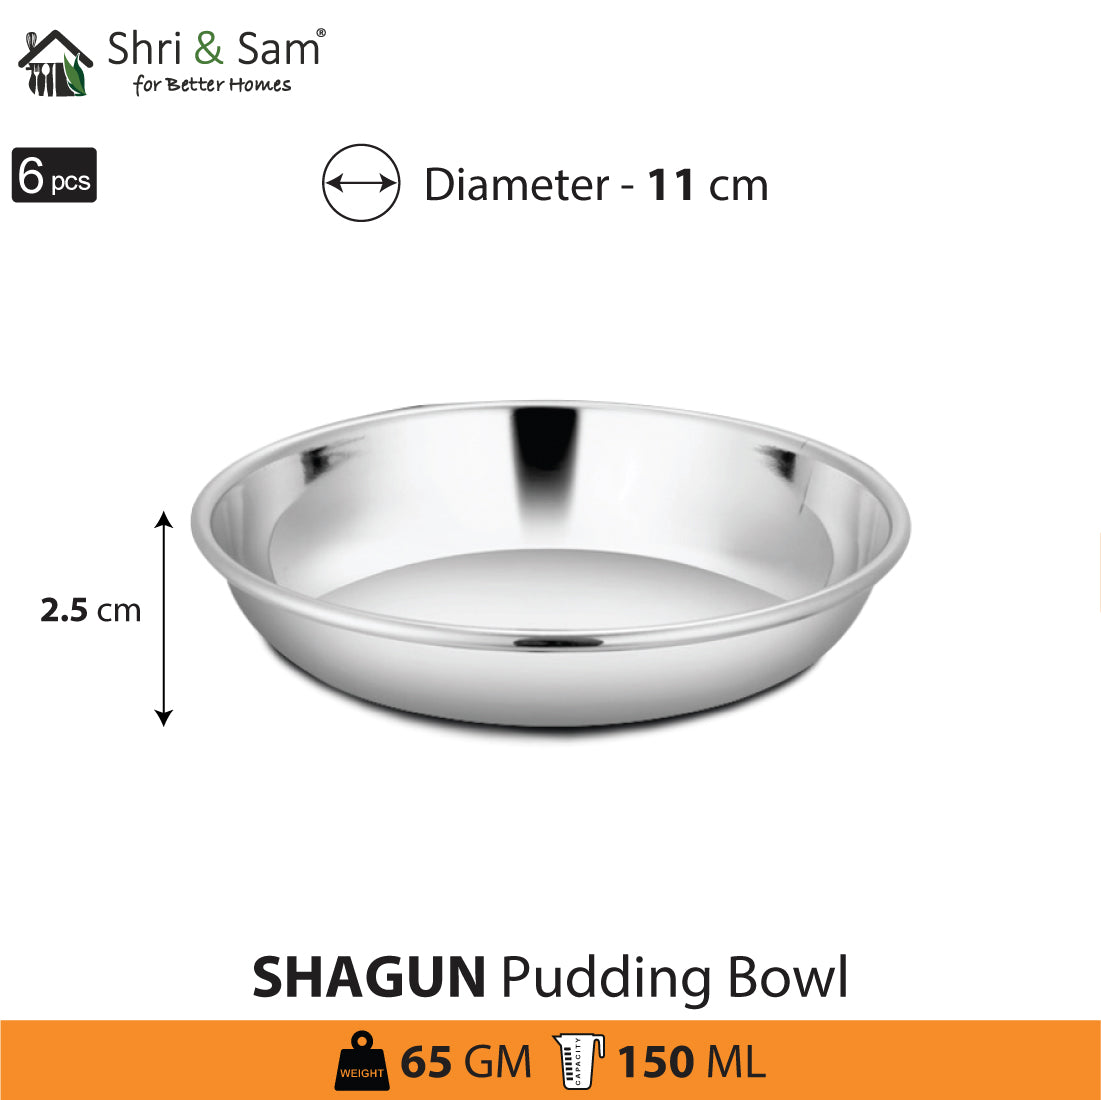 Stainless Steel 6 PCS Pudding Bowl Shagun